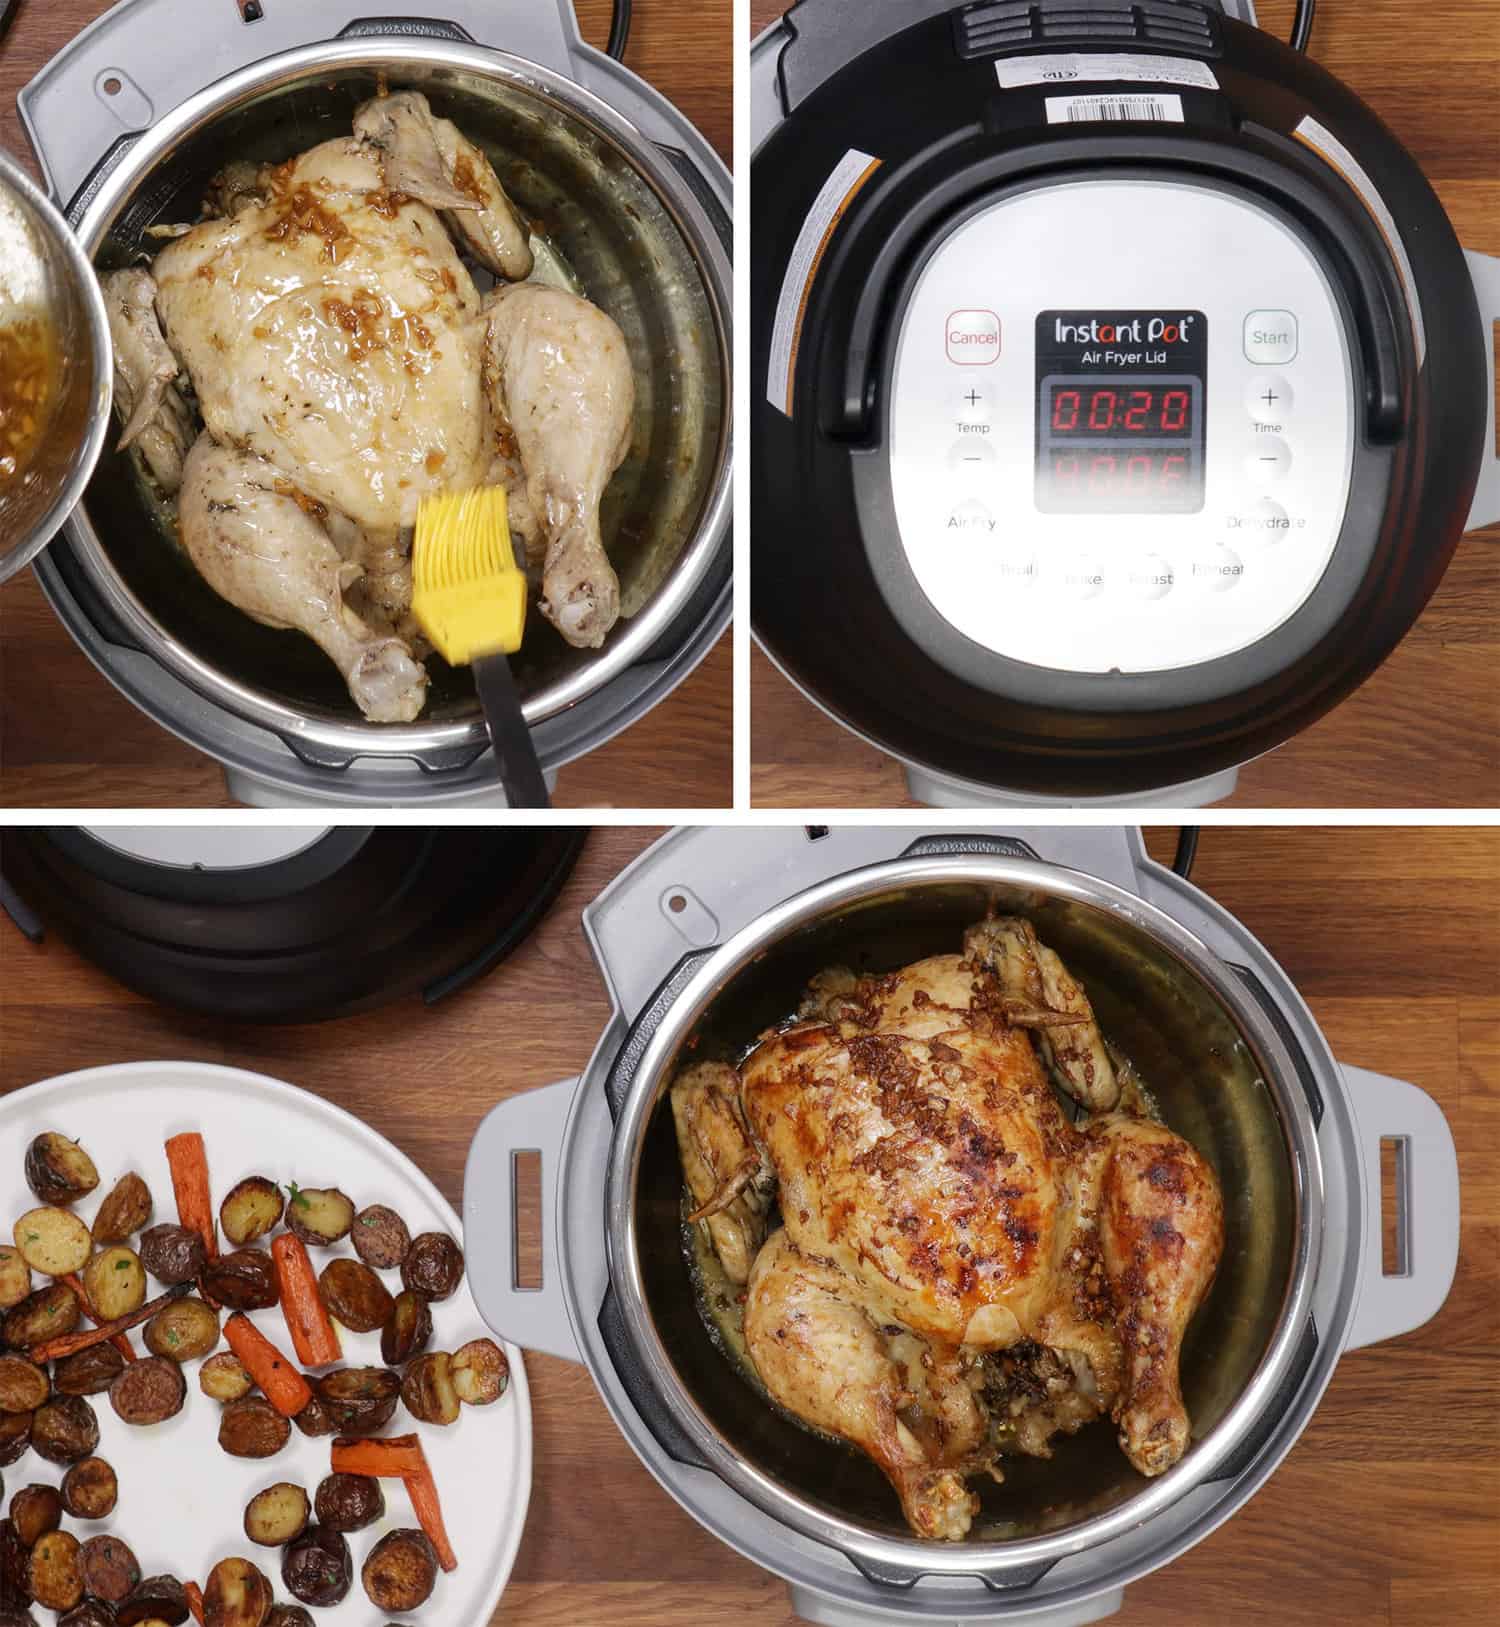 https://www.pressurecookrecipes.com/wp-content/uploads/2018/07/instant-pot-air-fryer-whole-chicken.jpg